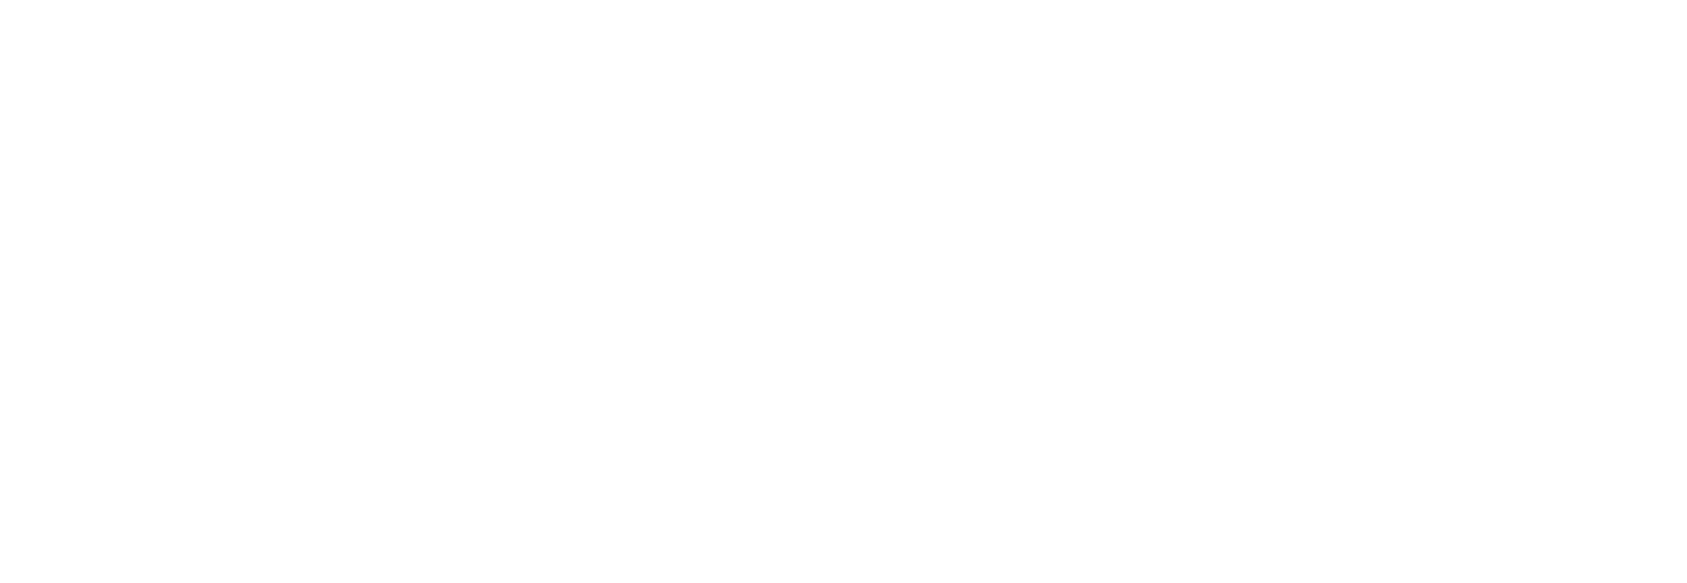 Kompact Solutions Logo White Transparent (no sides)Black